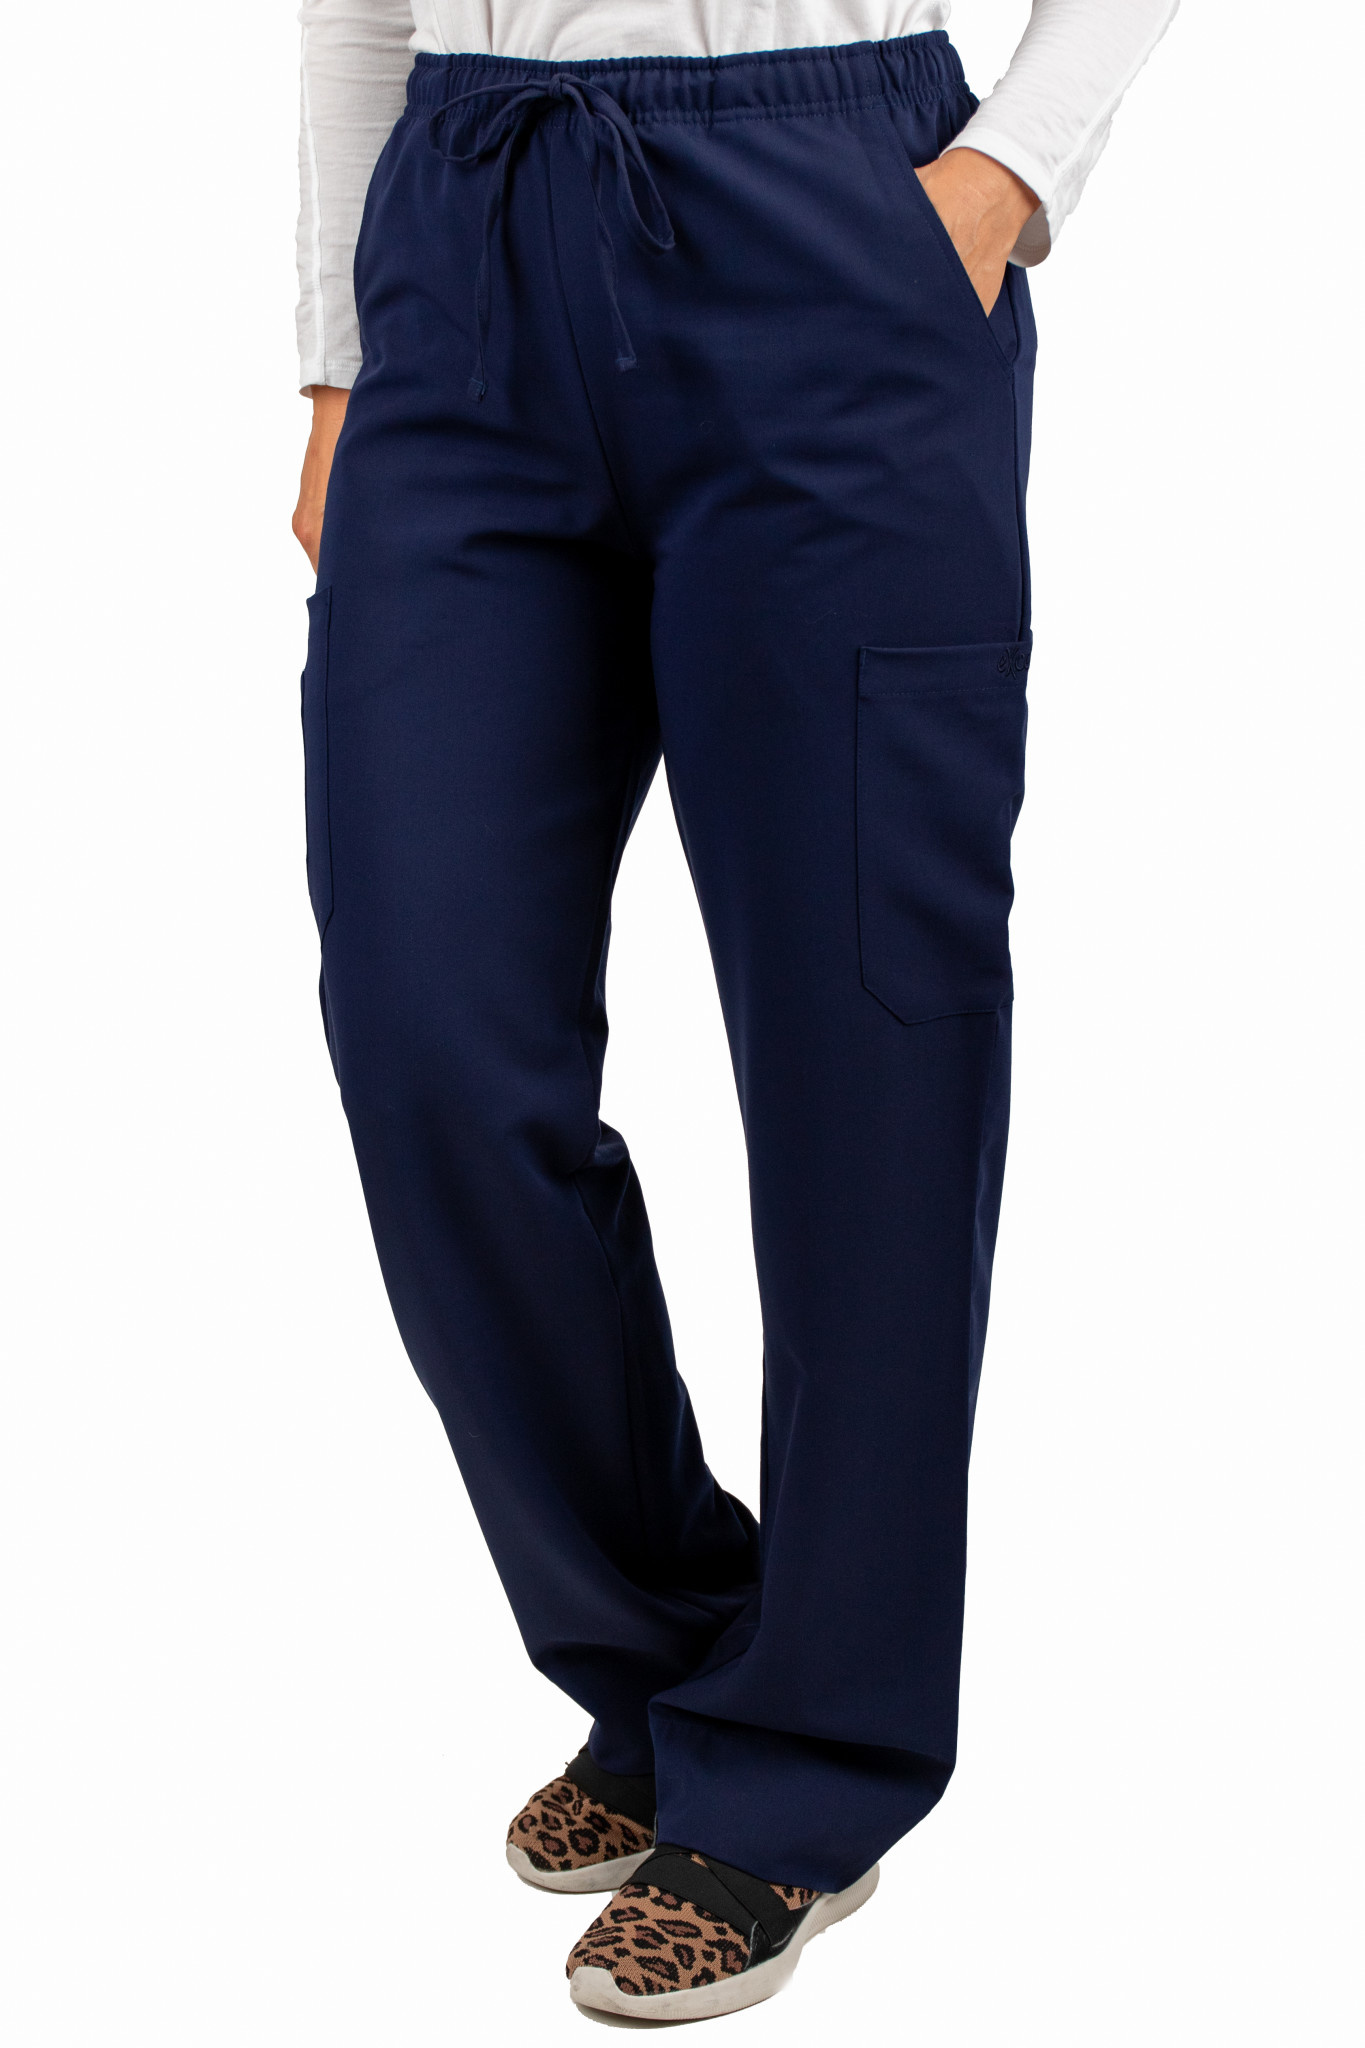 Navy Blue Women's Pants 727